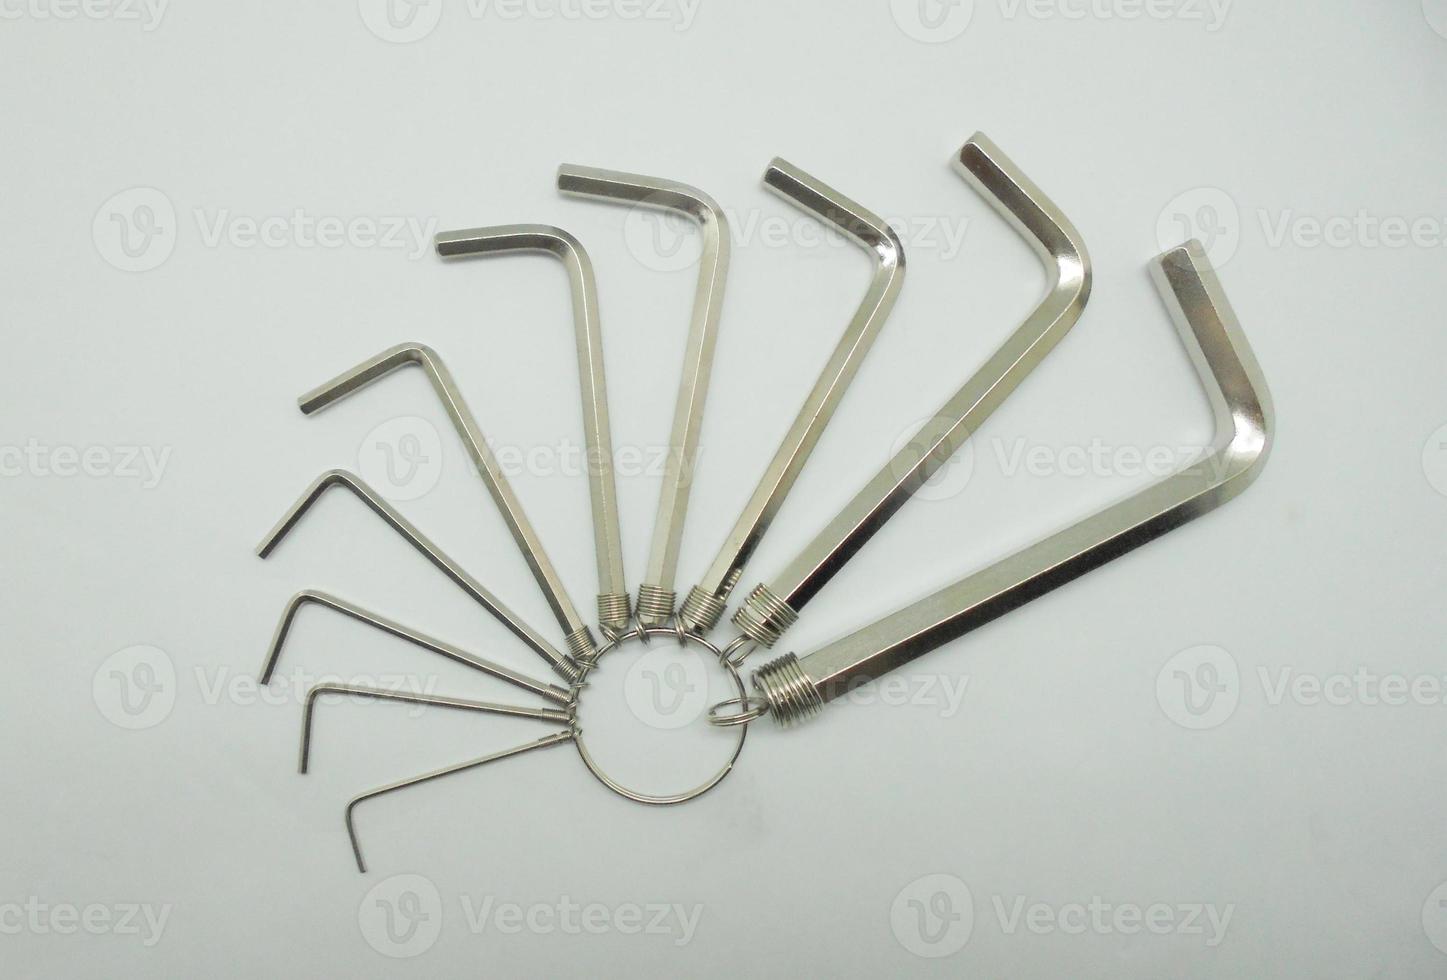 hexagonal key wrench set photo